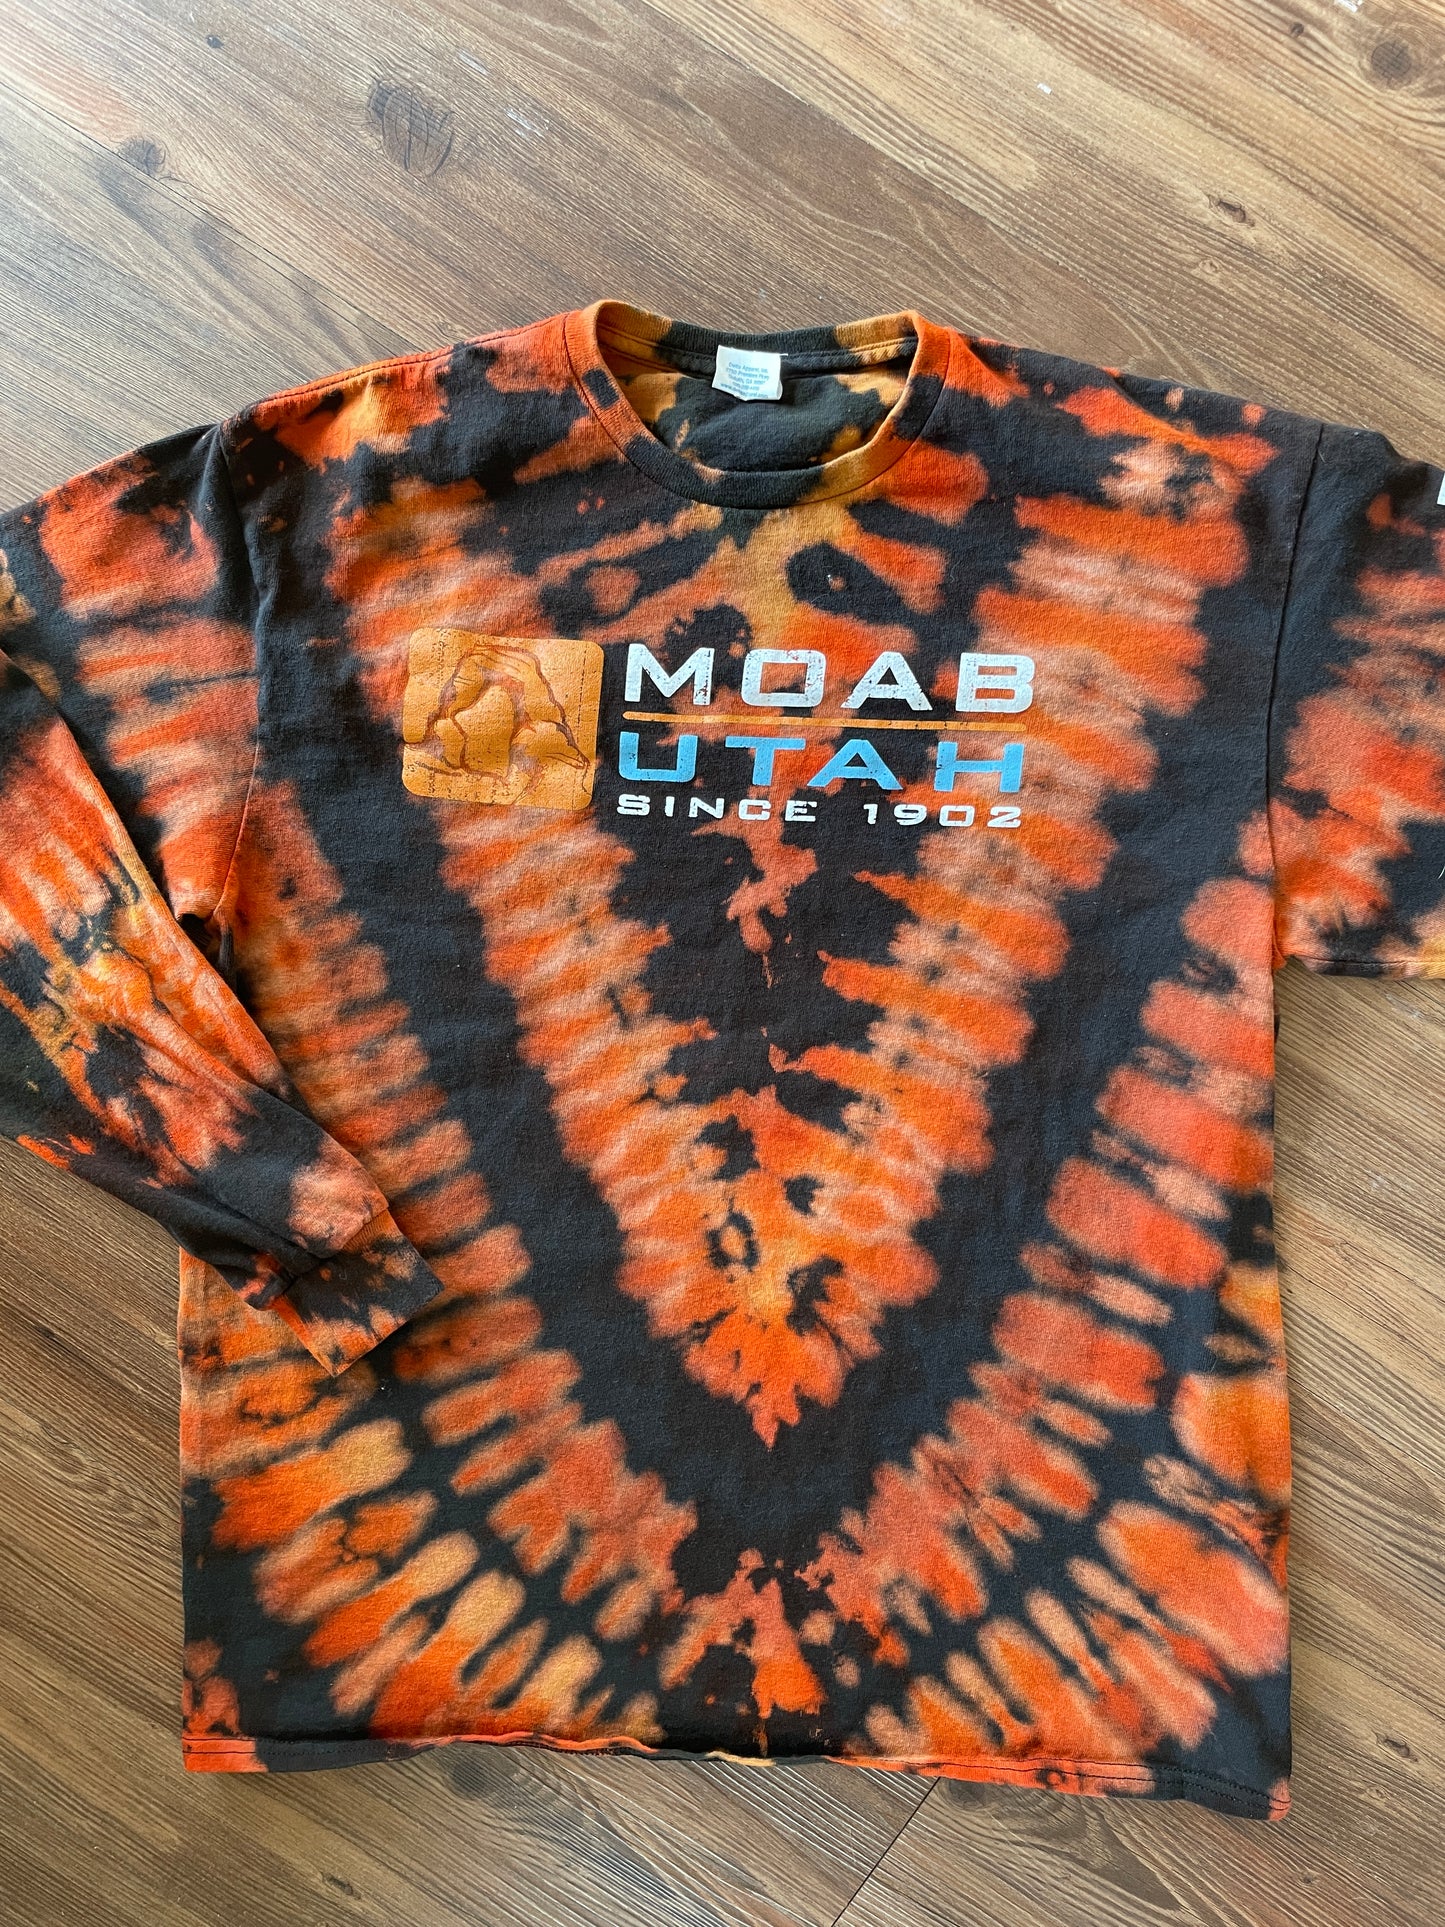 Medium/Large Men’s Moab, Utah Handmade Tie Dye T-Shirt | Black, Red, and Orange V-Pleated Tie Dye Long Sleeve